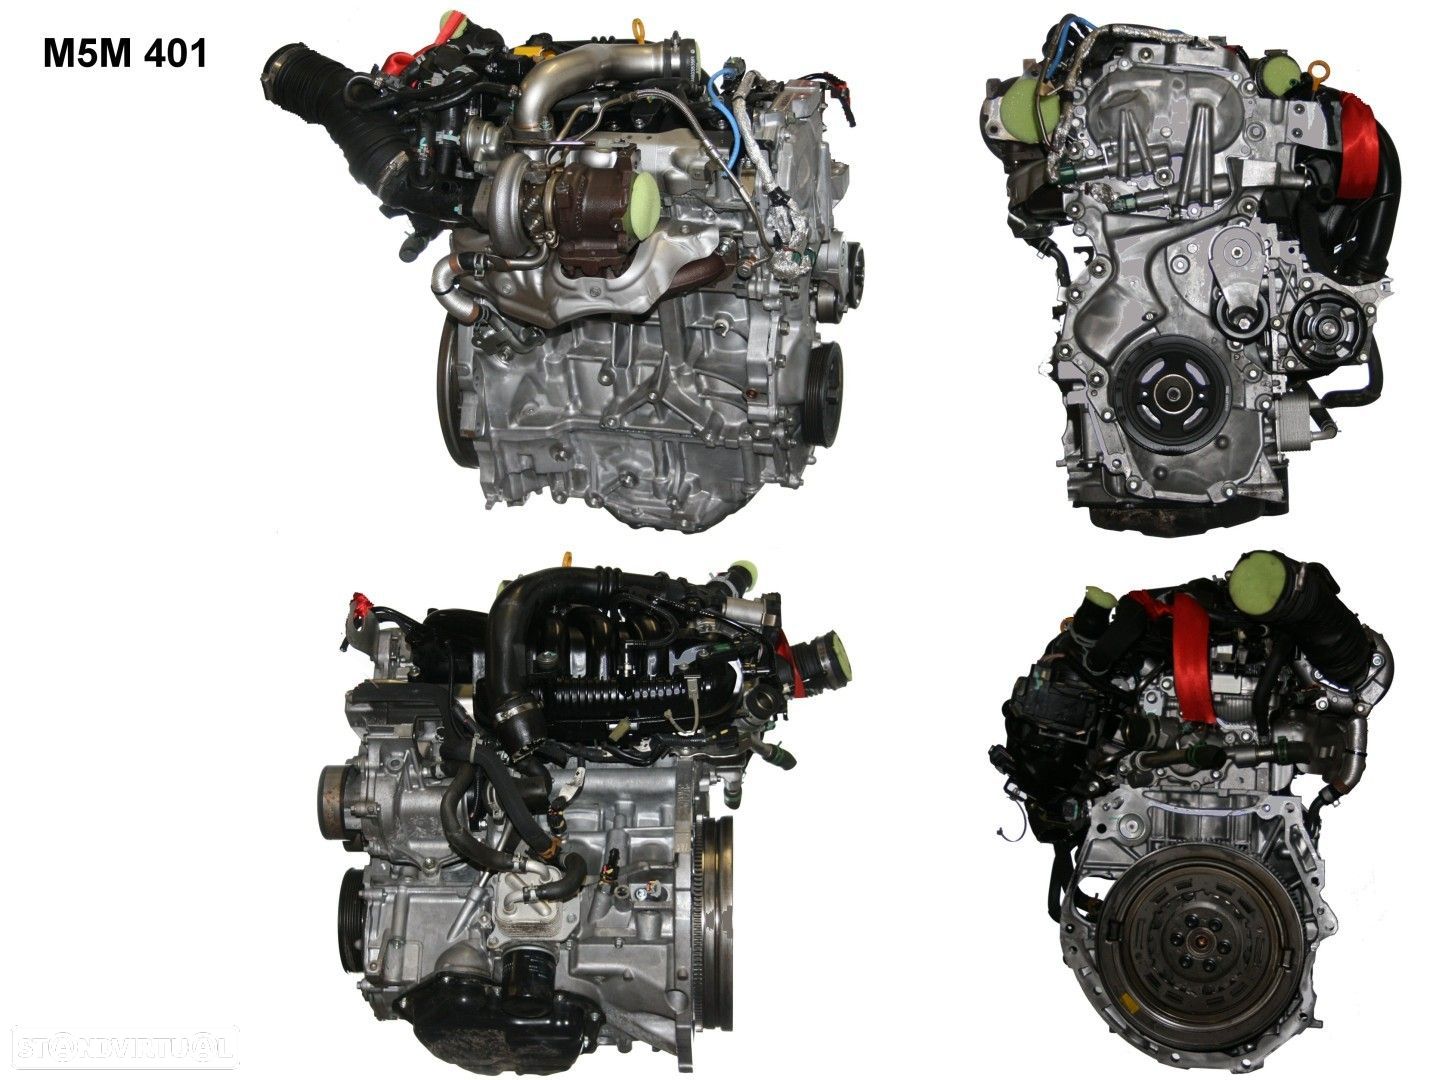 Motor Completo  Usado RENAULT Clio 1.6 RS M5M 401 - 1